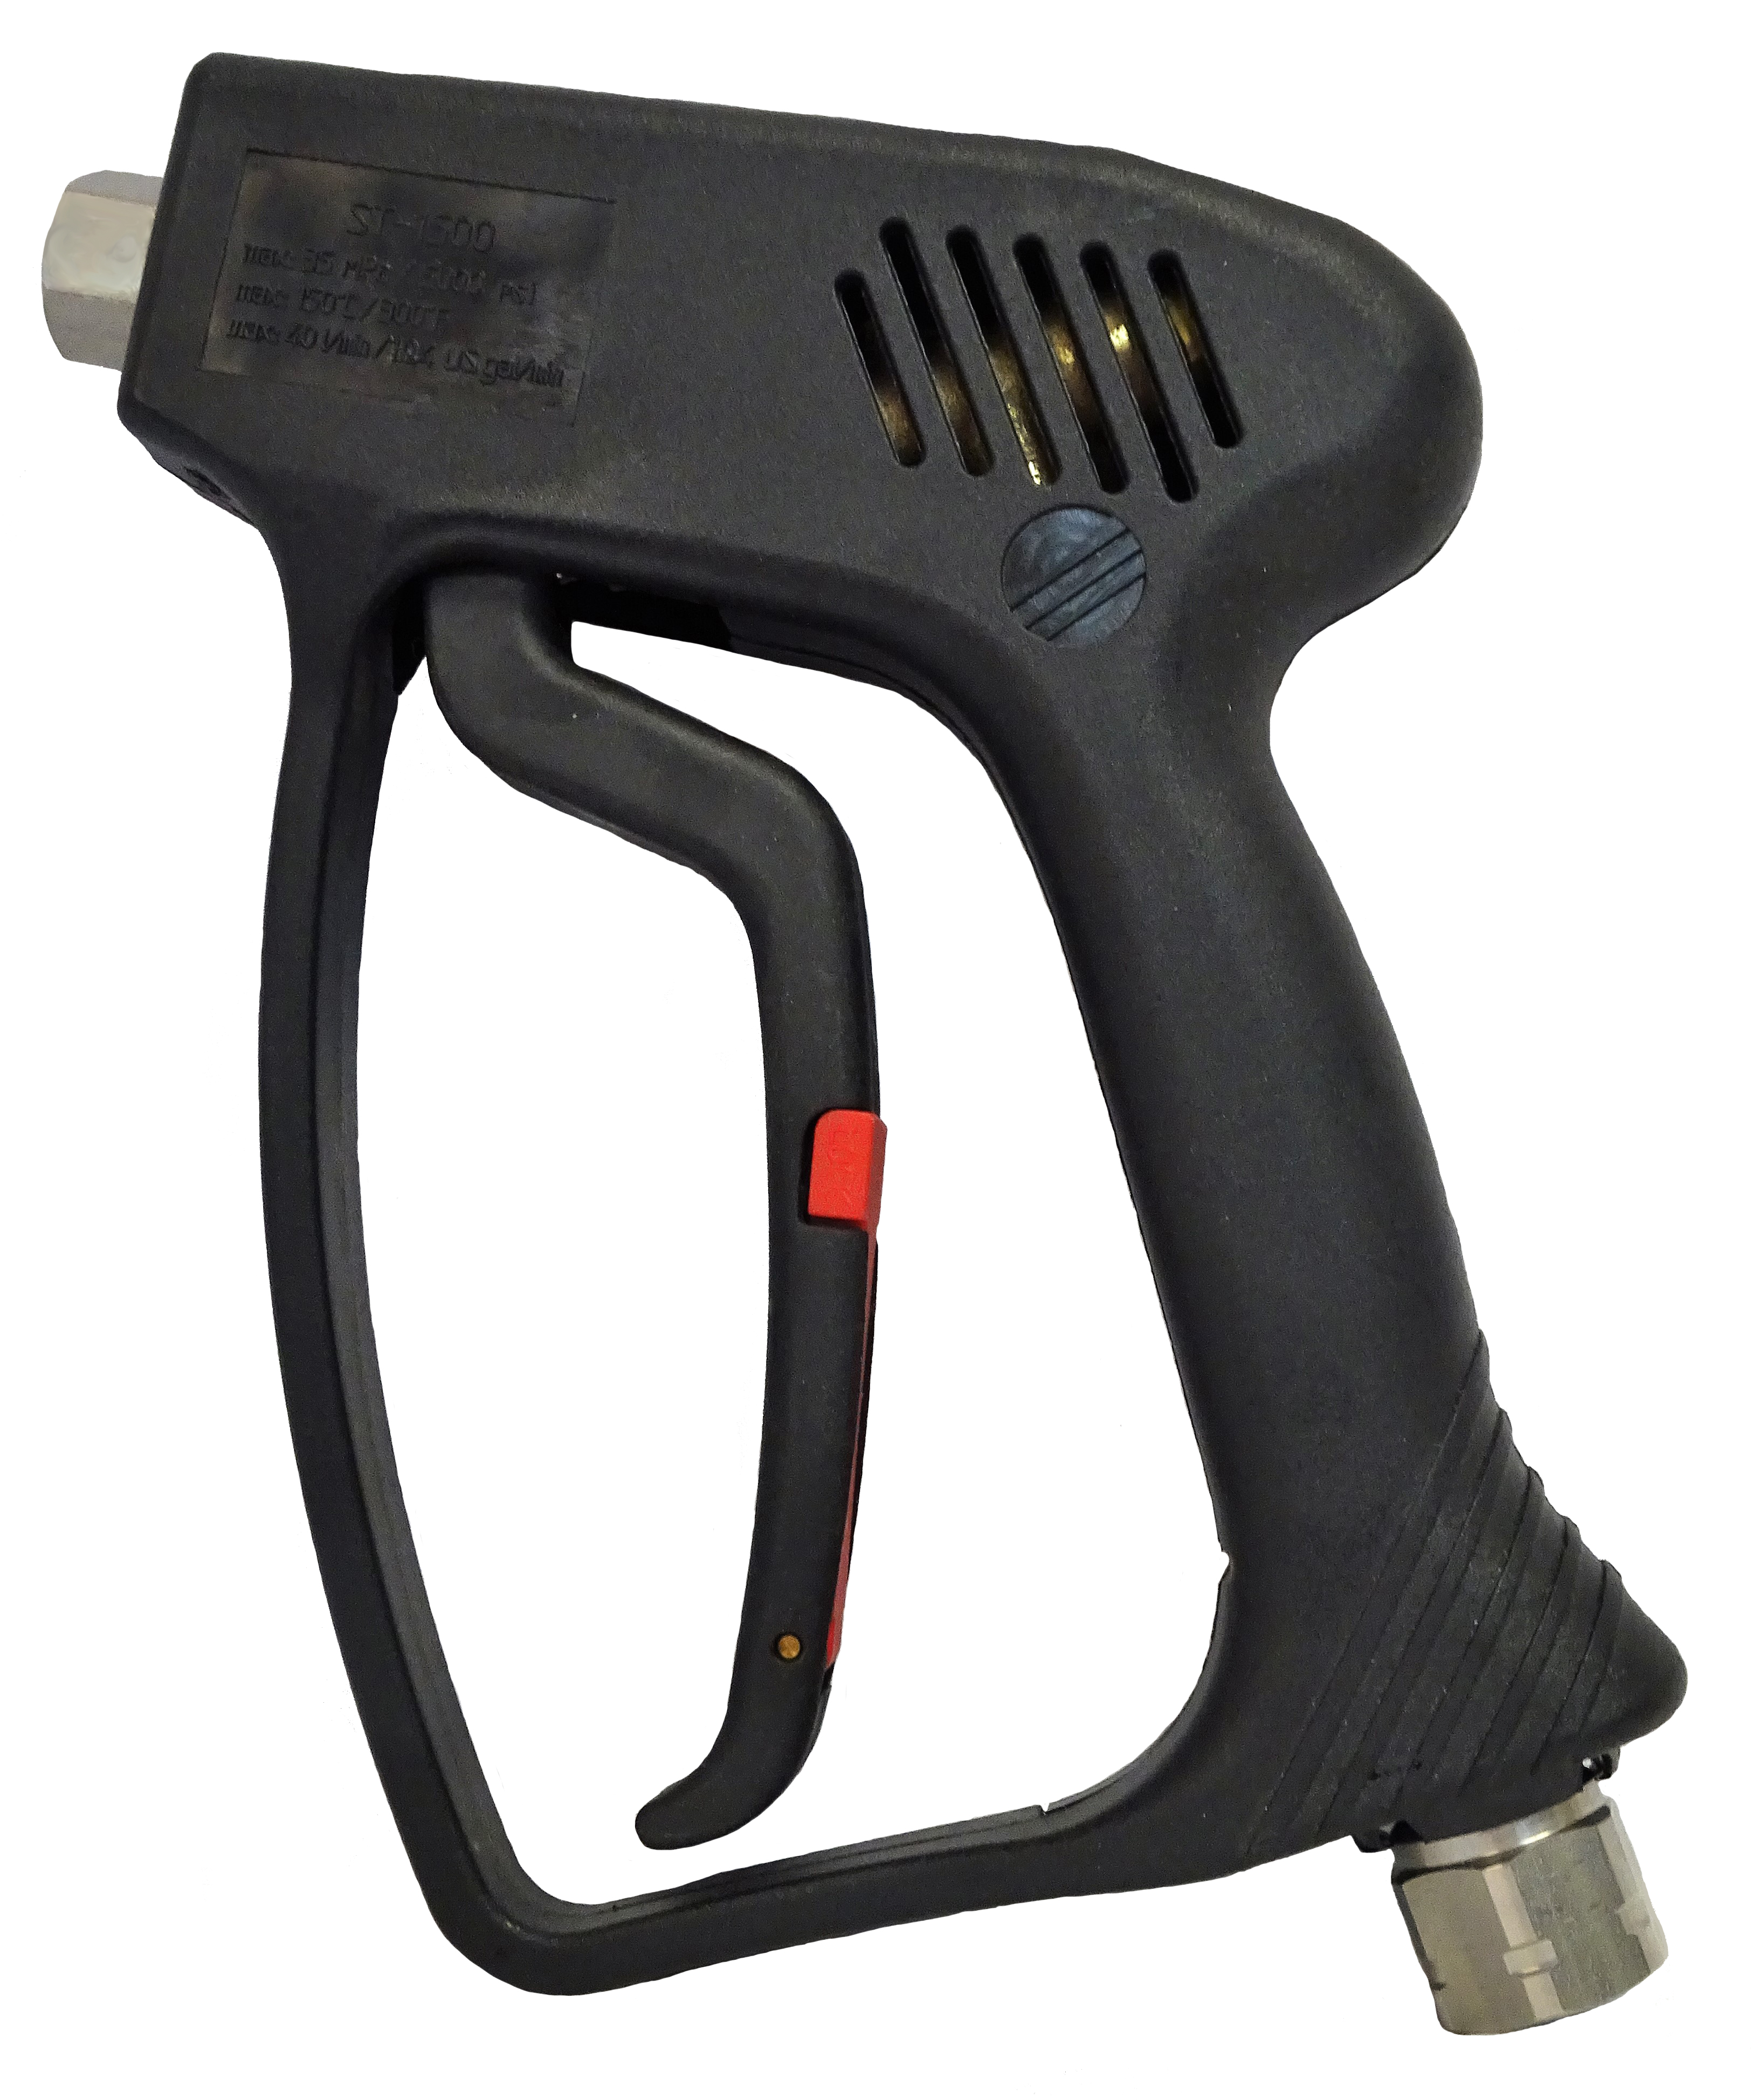 Suttner 202605600 Easy Pull Anti-fatigue Spray Gun 5000 PSI for sale online 